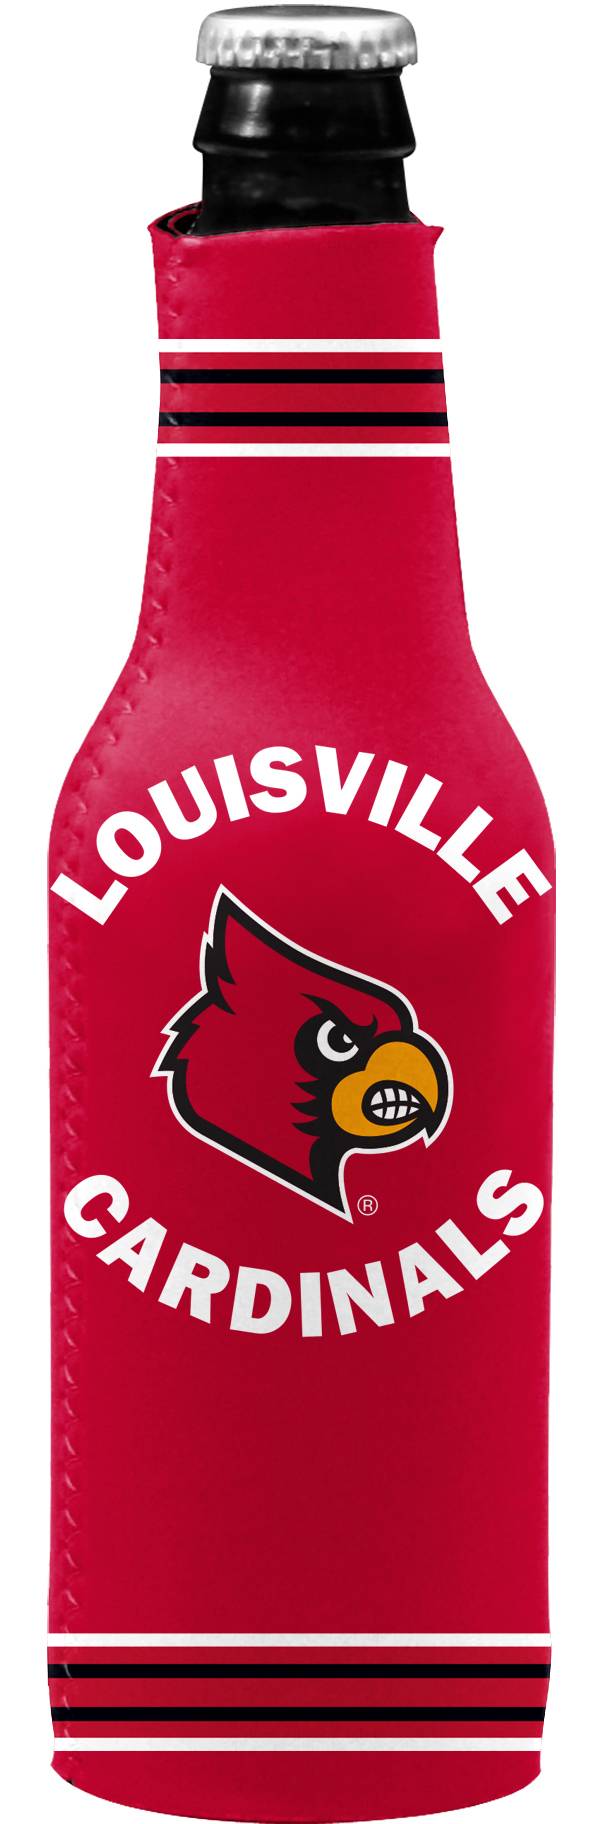 Louisville Cardinals Bottle Koozie product image